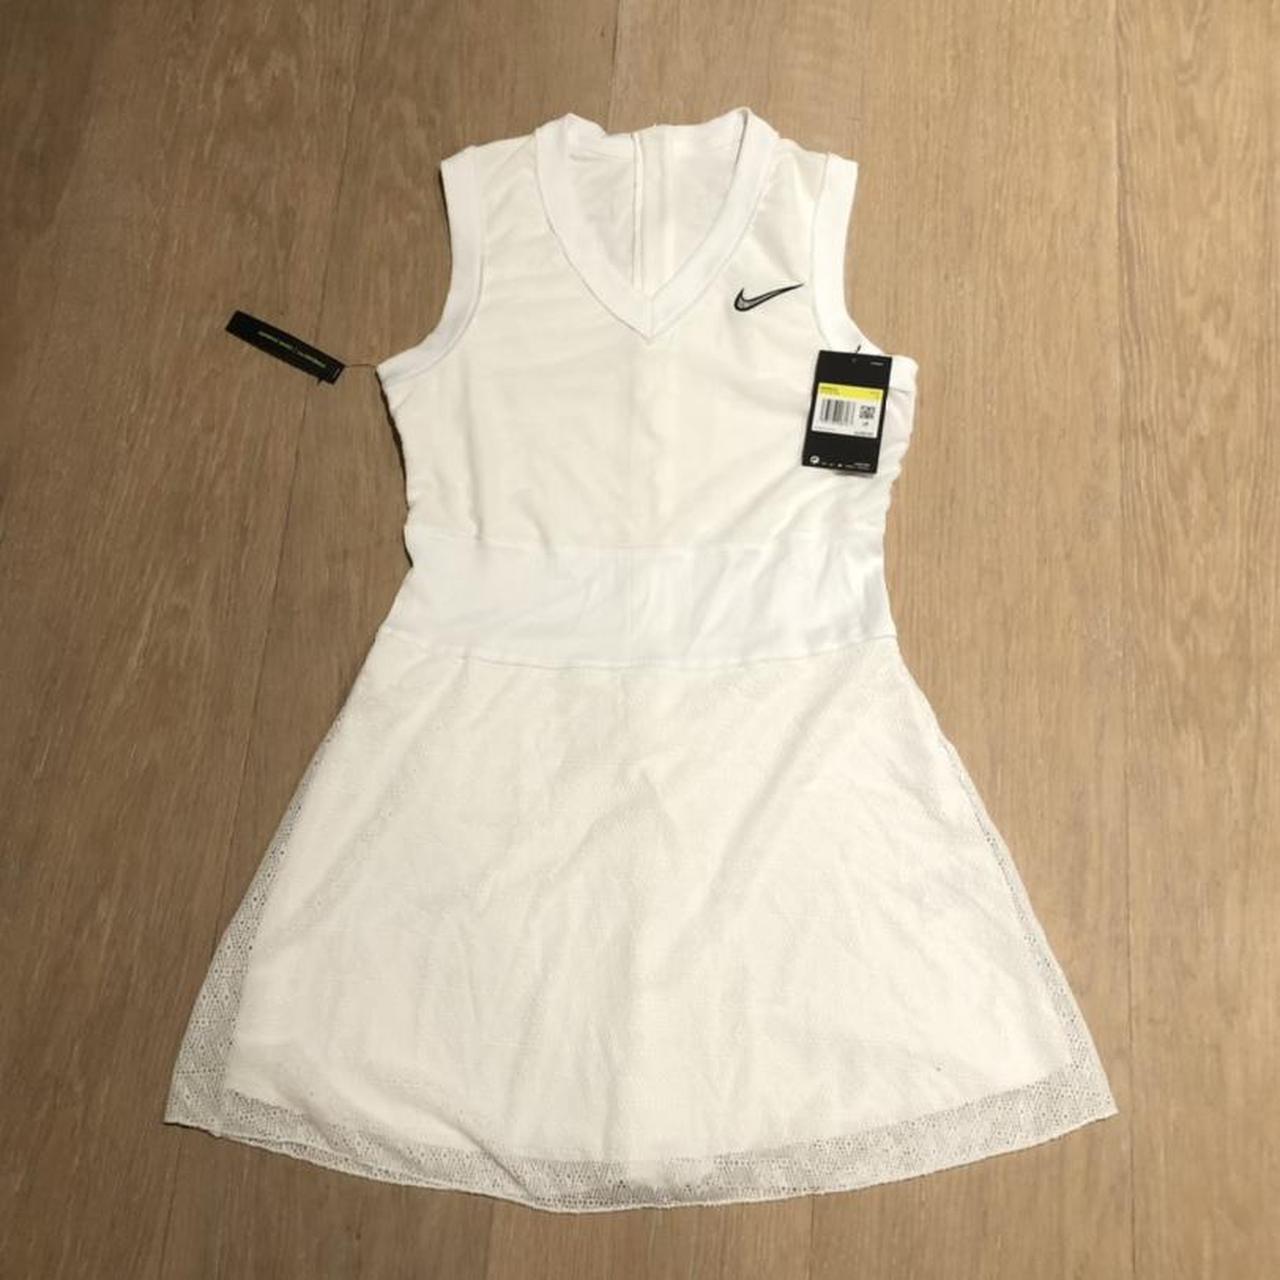 Product Image 1 - Nike white tennis dress w/